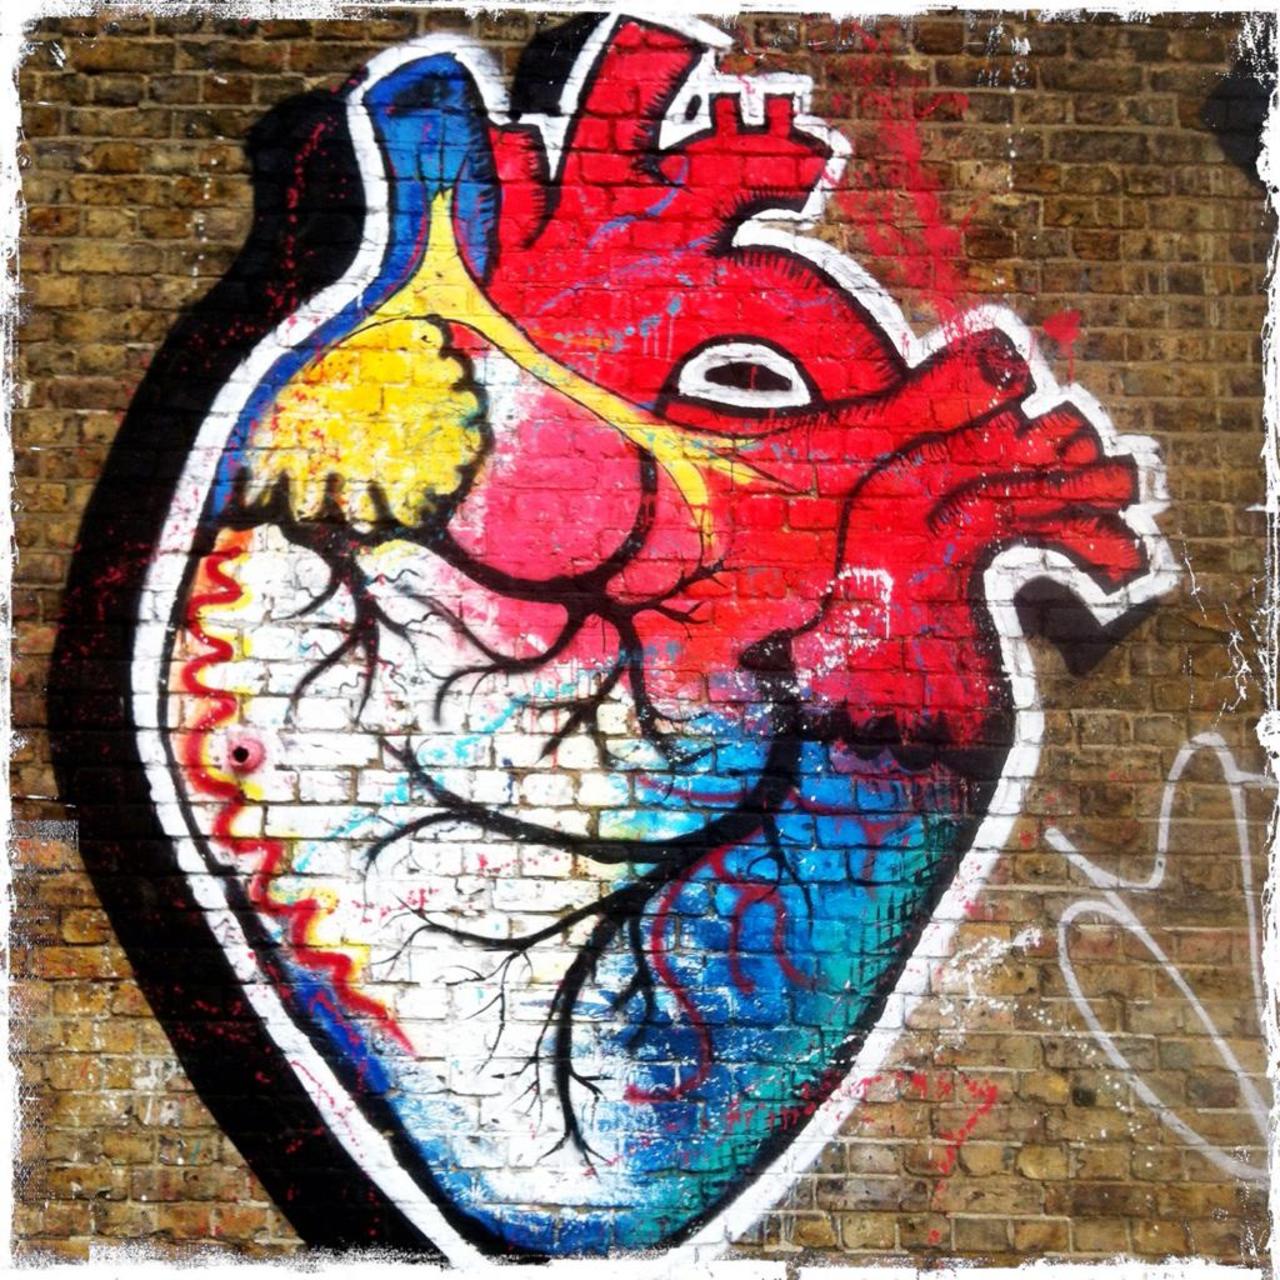 RT @BrickLaneArt: The heart from @frankiestrand and @_JaneLaurie great mural in Hackney Wick #art #streetart #graffiti http://t.co/hEKFUH9KmE